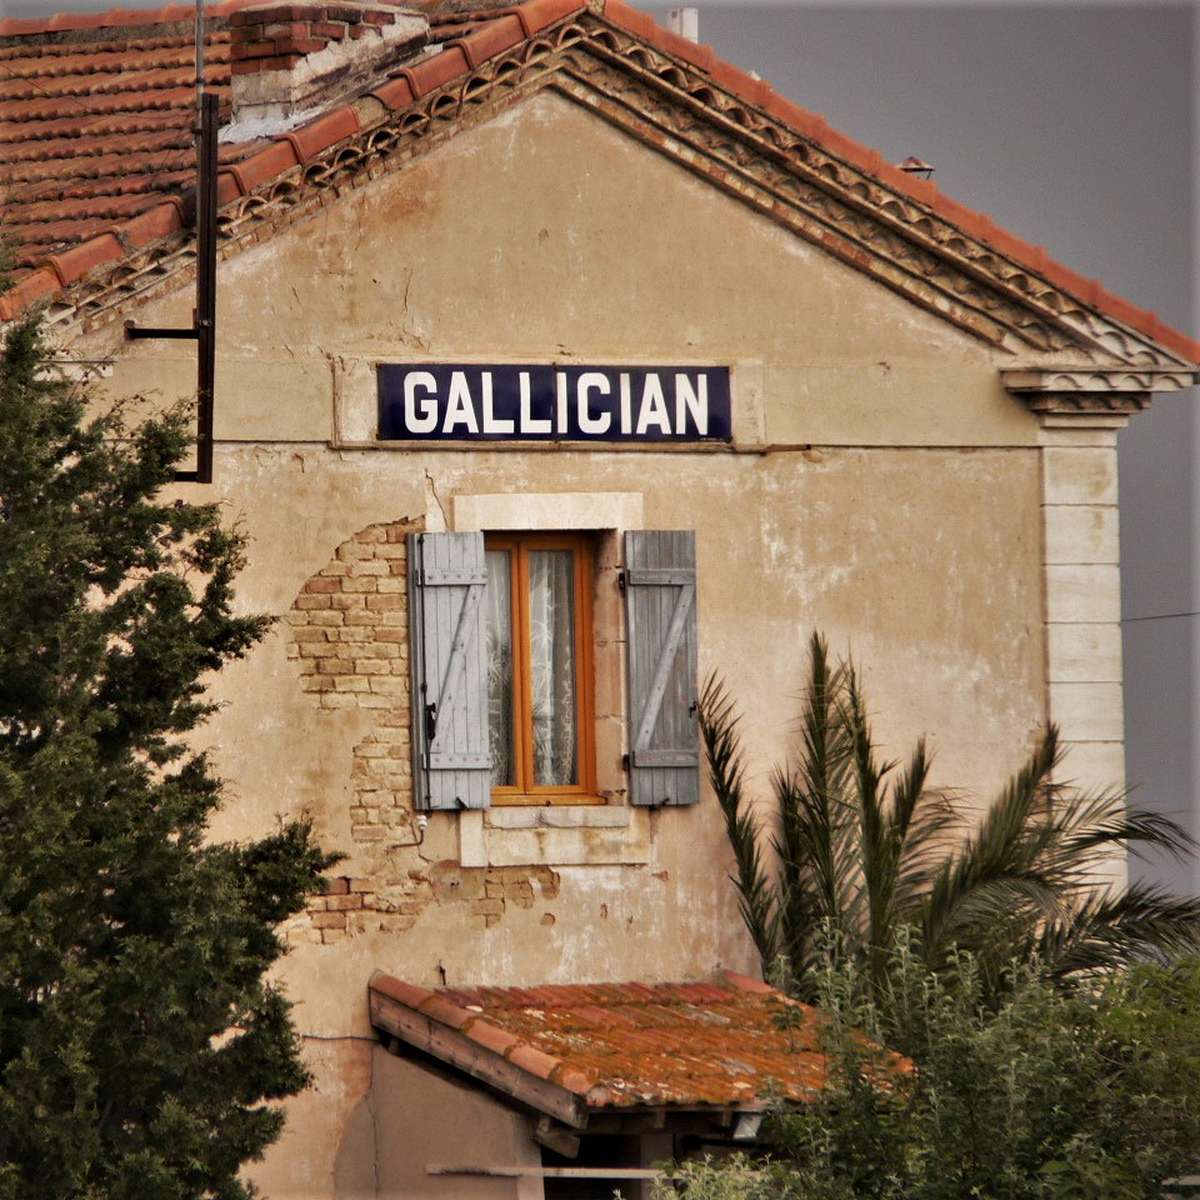 Gallician ©1MP2